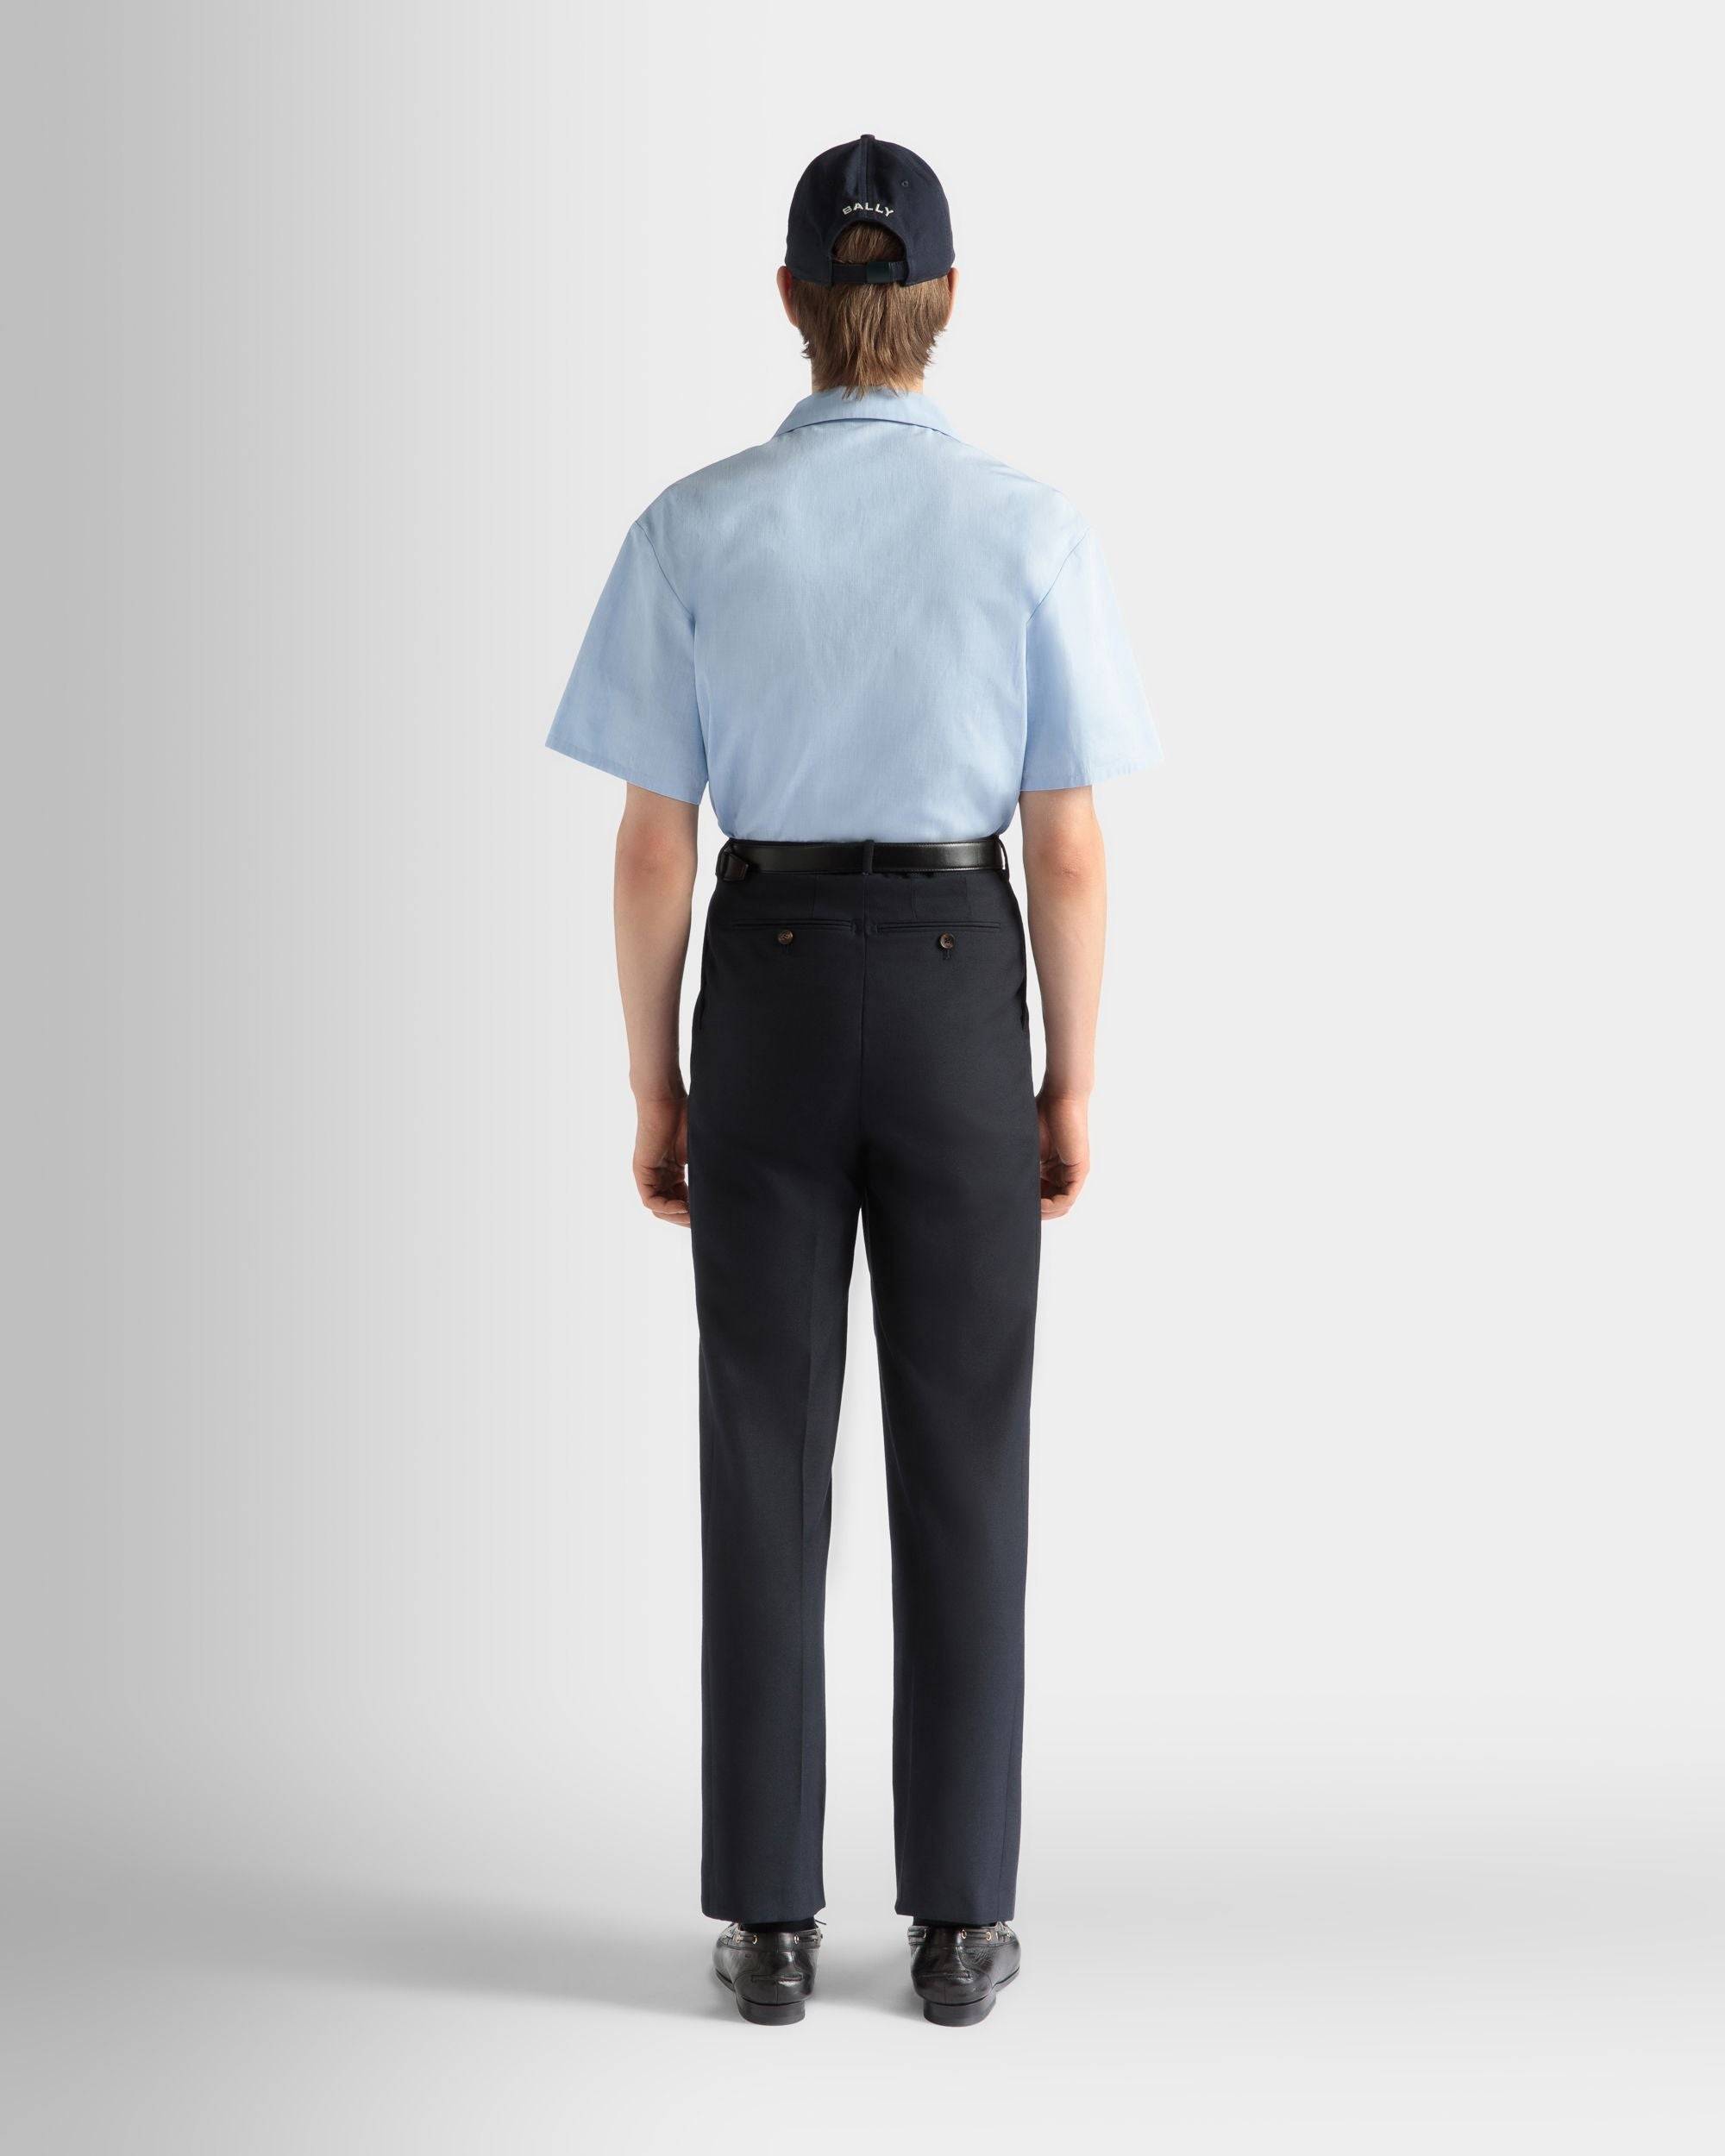 Pants in Navy Blue Wool Blend - Men's - Bally - 06